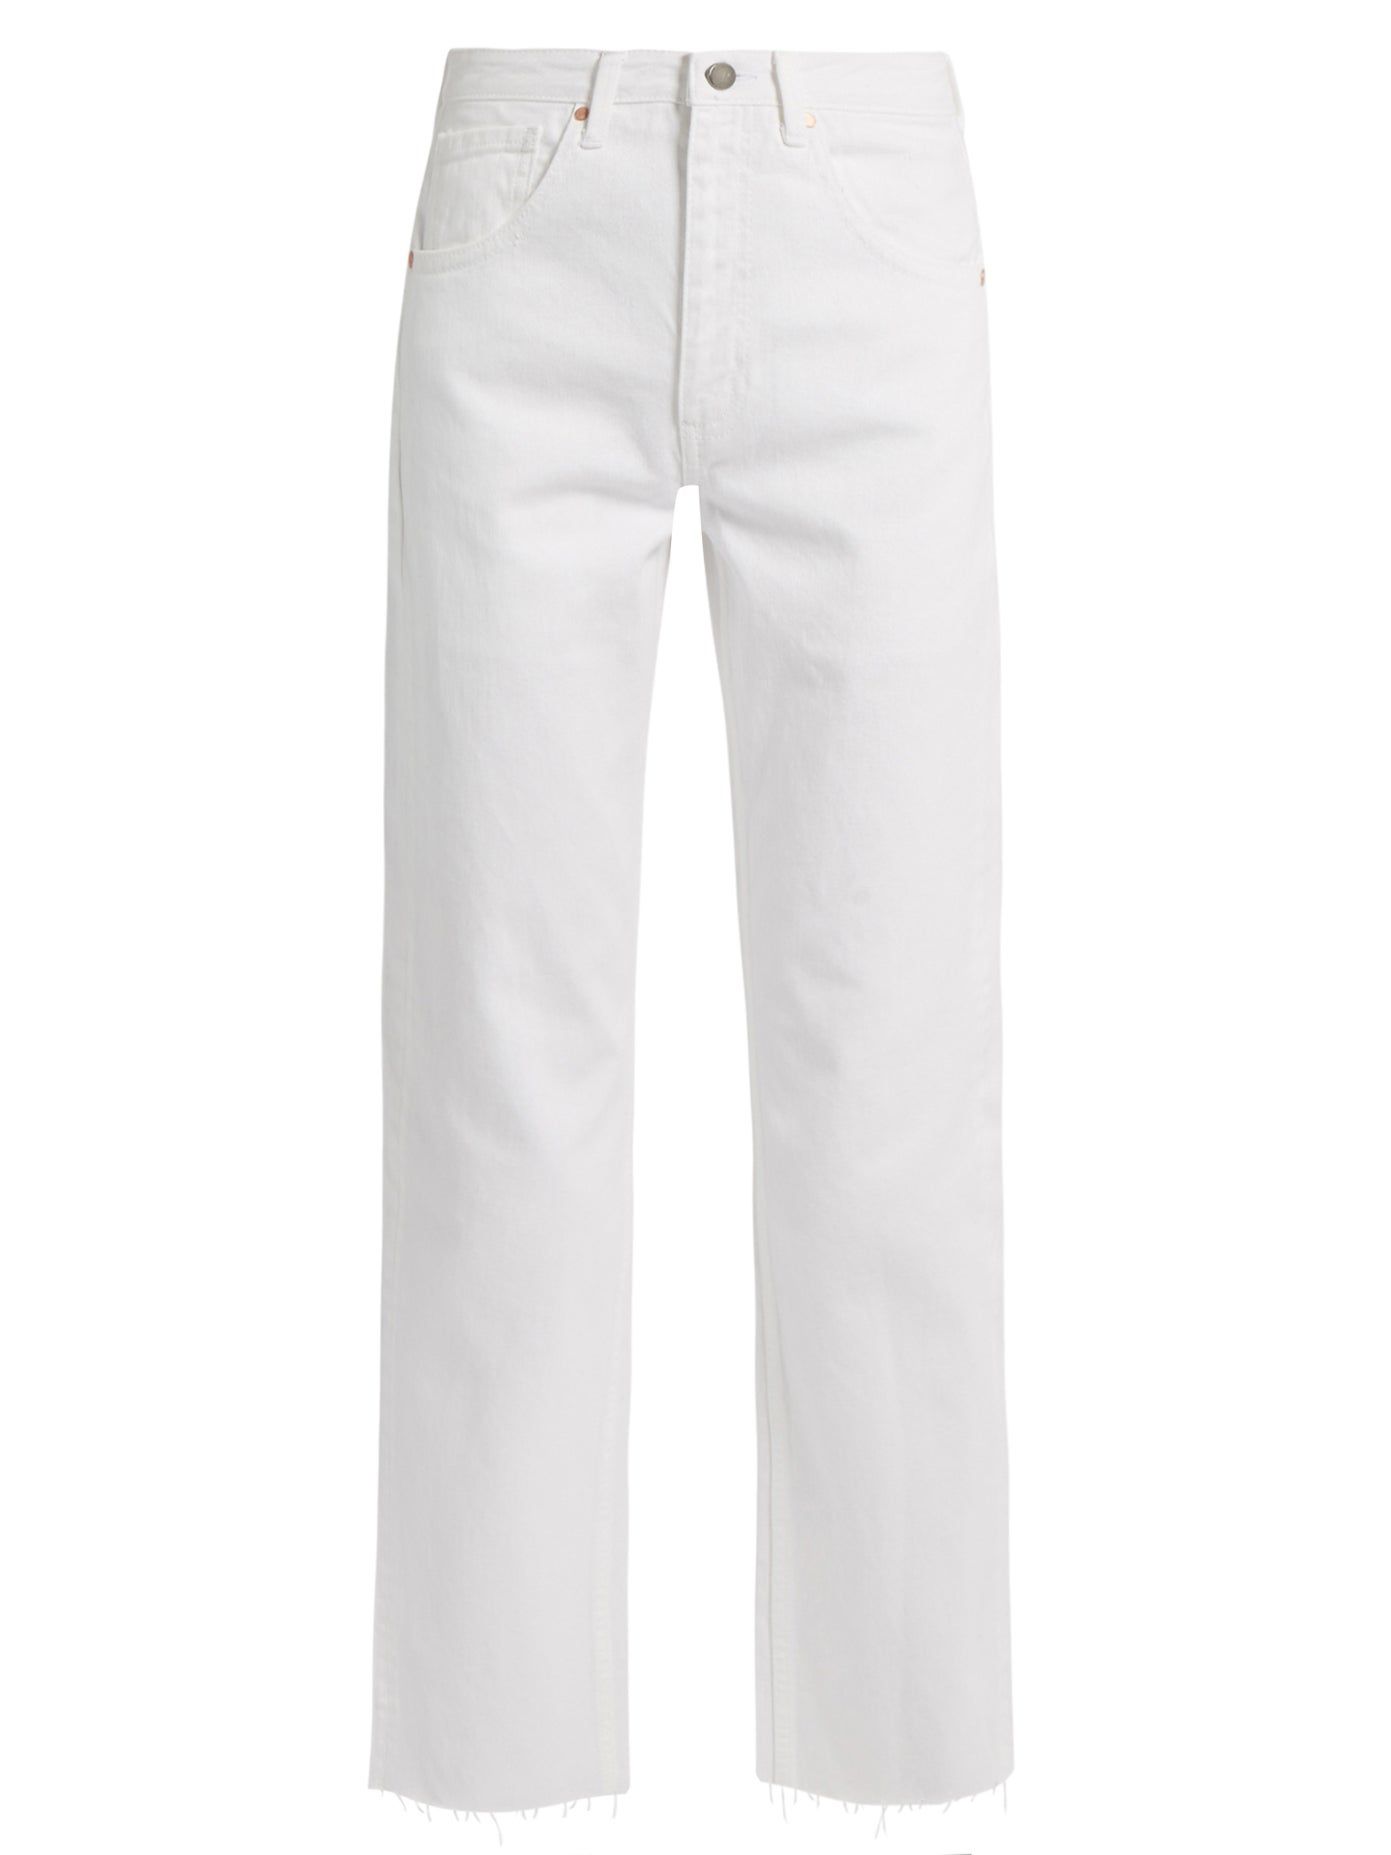 white denim jeans for ladies